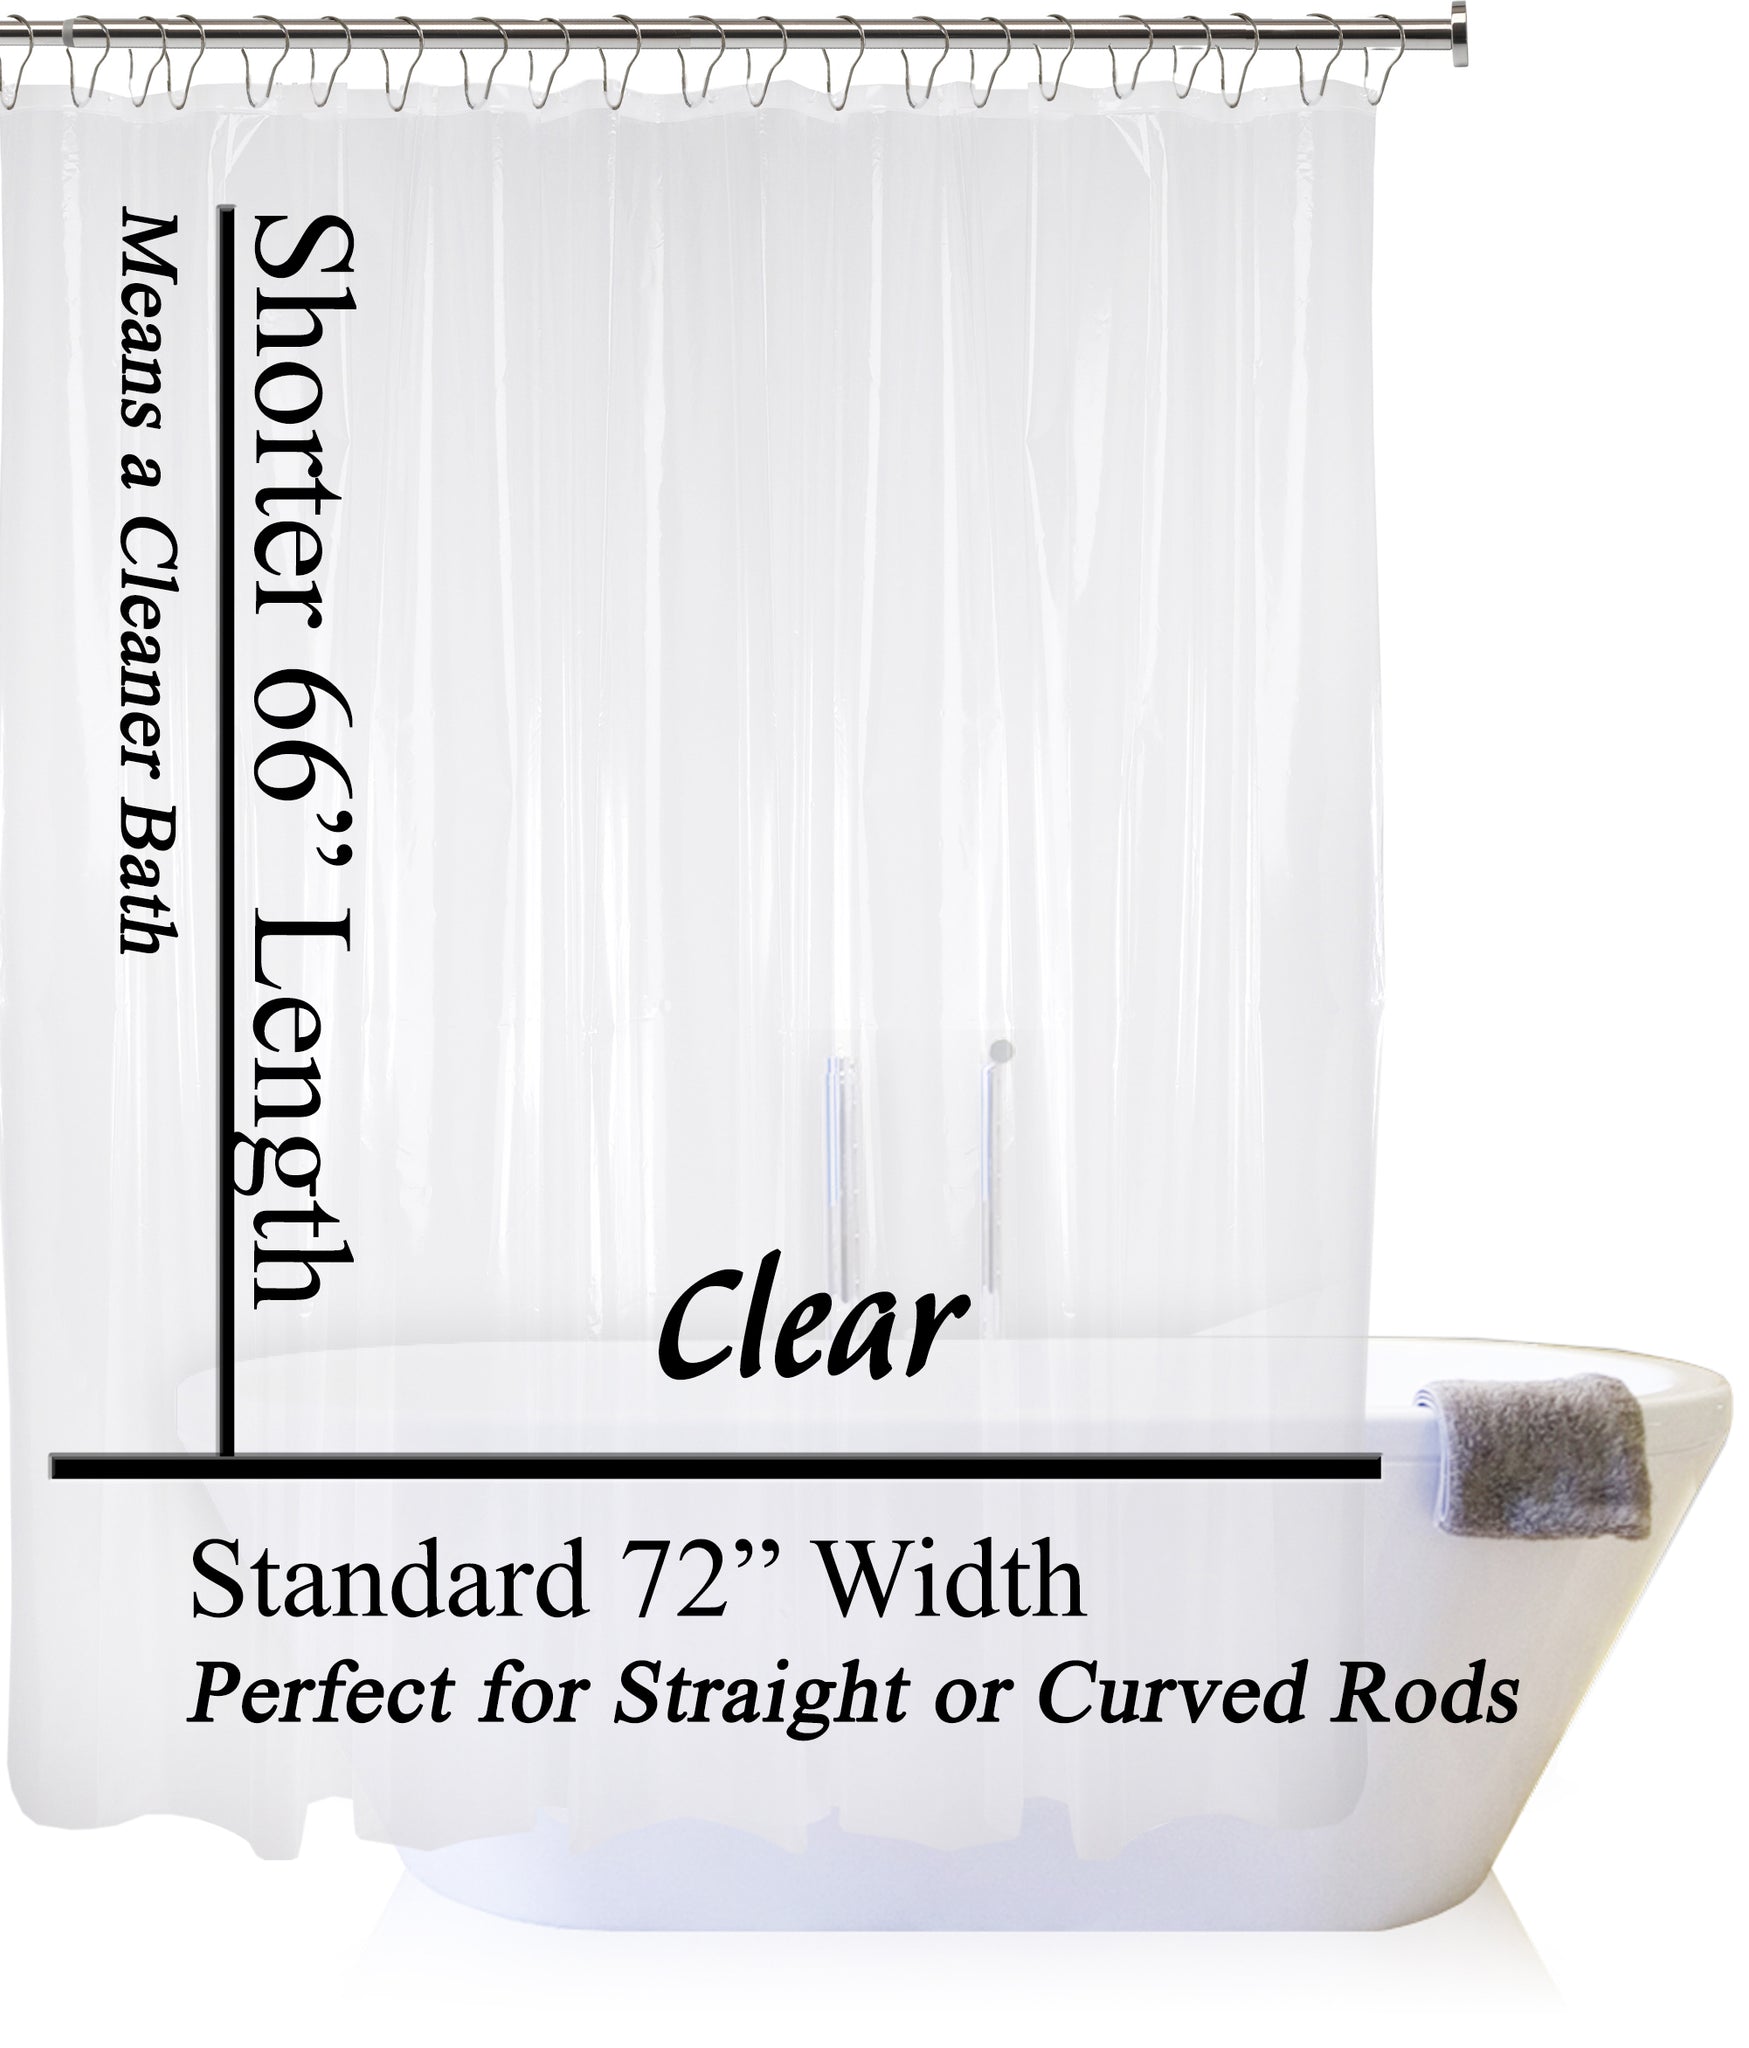 Short Cut Shower Liner Shorter Length Means A Cleaner Bath Rotator Rod